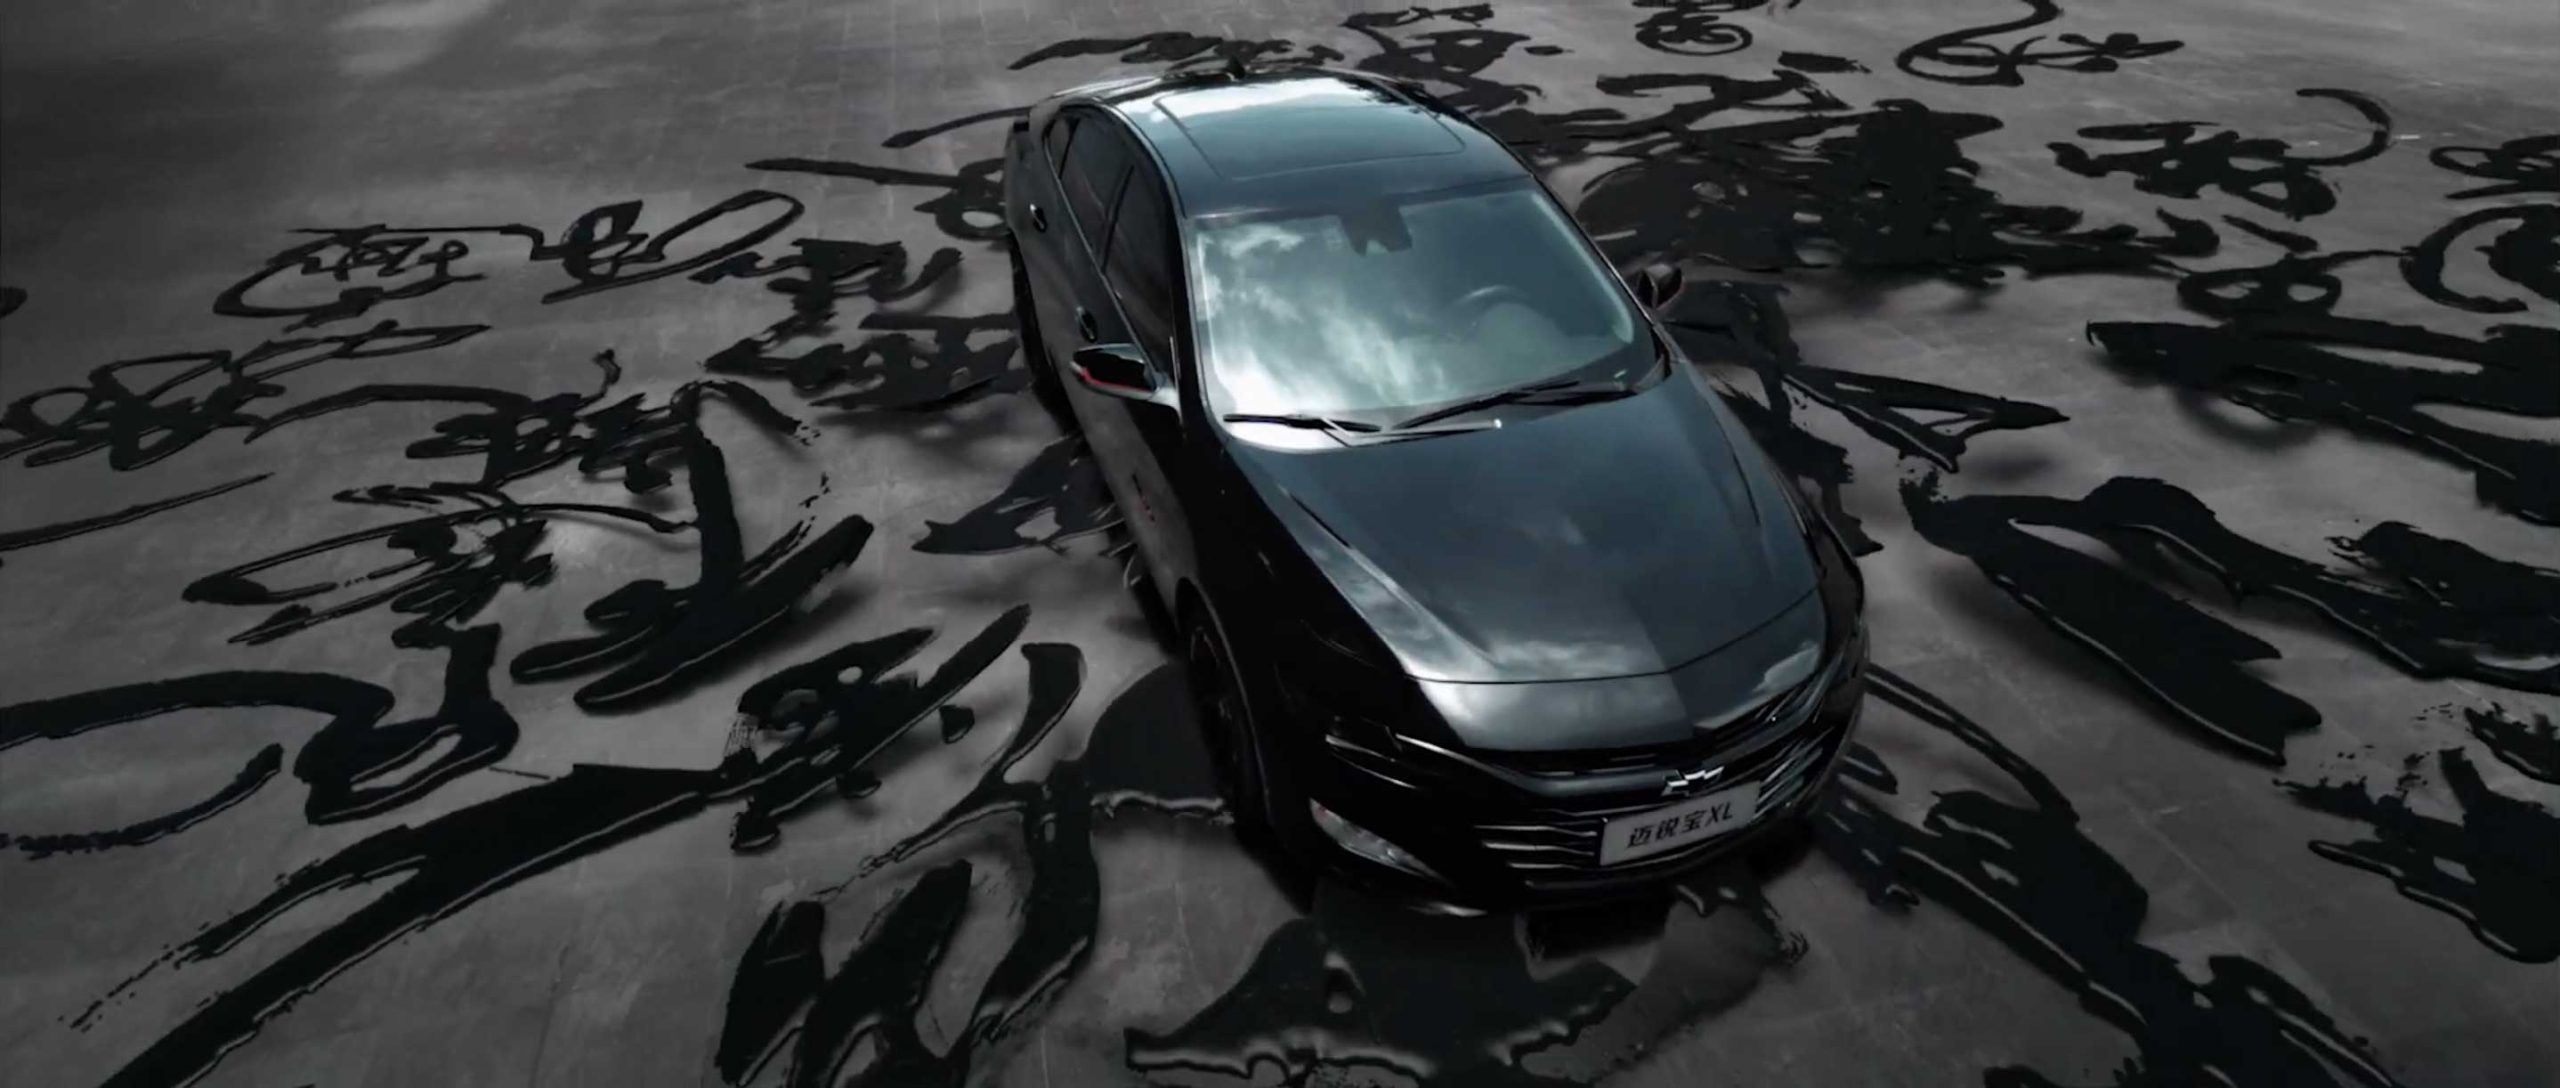 Chevrolet Black Bowtie Spot by Nexthing Director Fu Binbin | STASH MAGAZINE